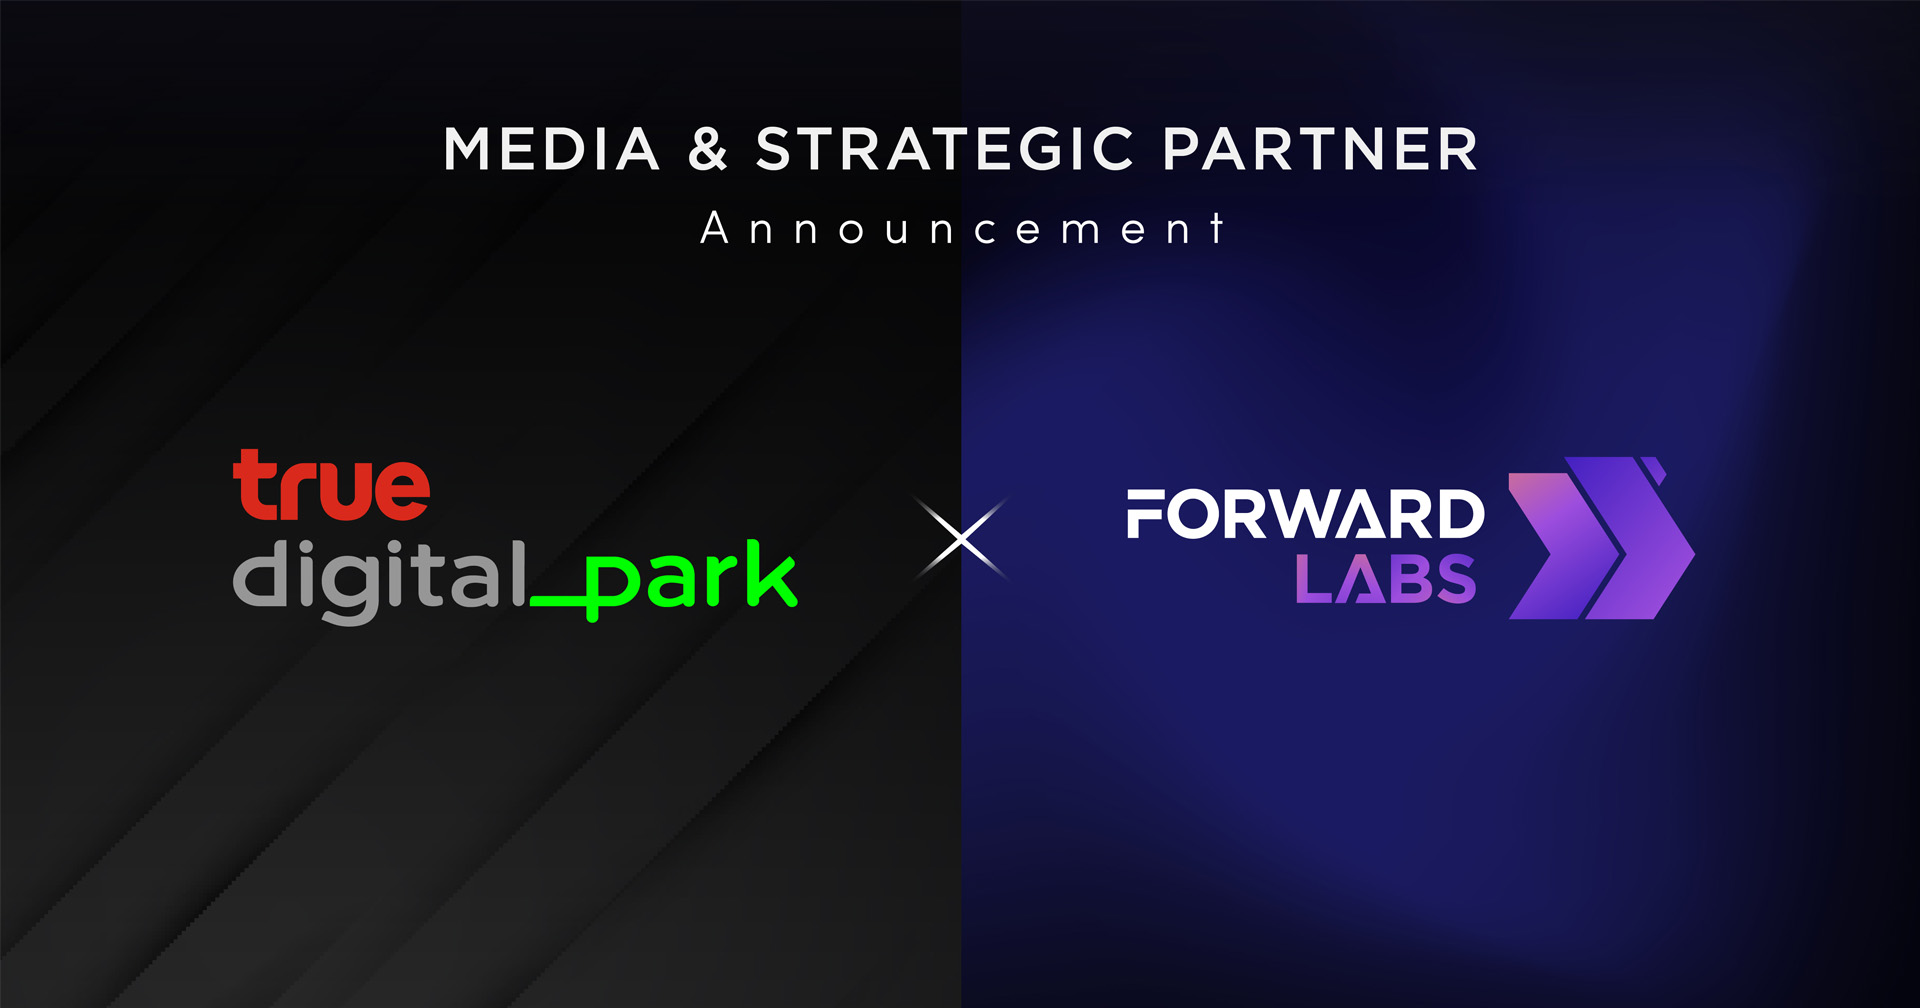 Forward Labs จับมือ True Digital Park ถ่ายทอดความรู้เพื่อต่อยอด Impact Technology สร้างอีโคซิสเต็ม  Startup รุ่นใหม่